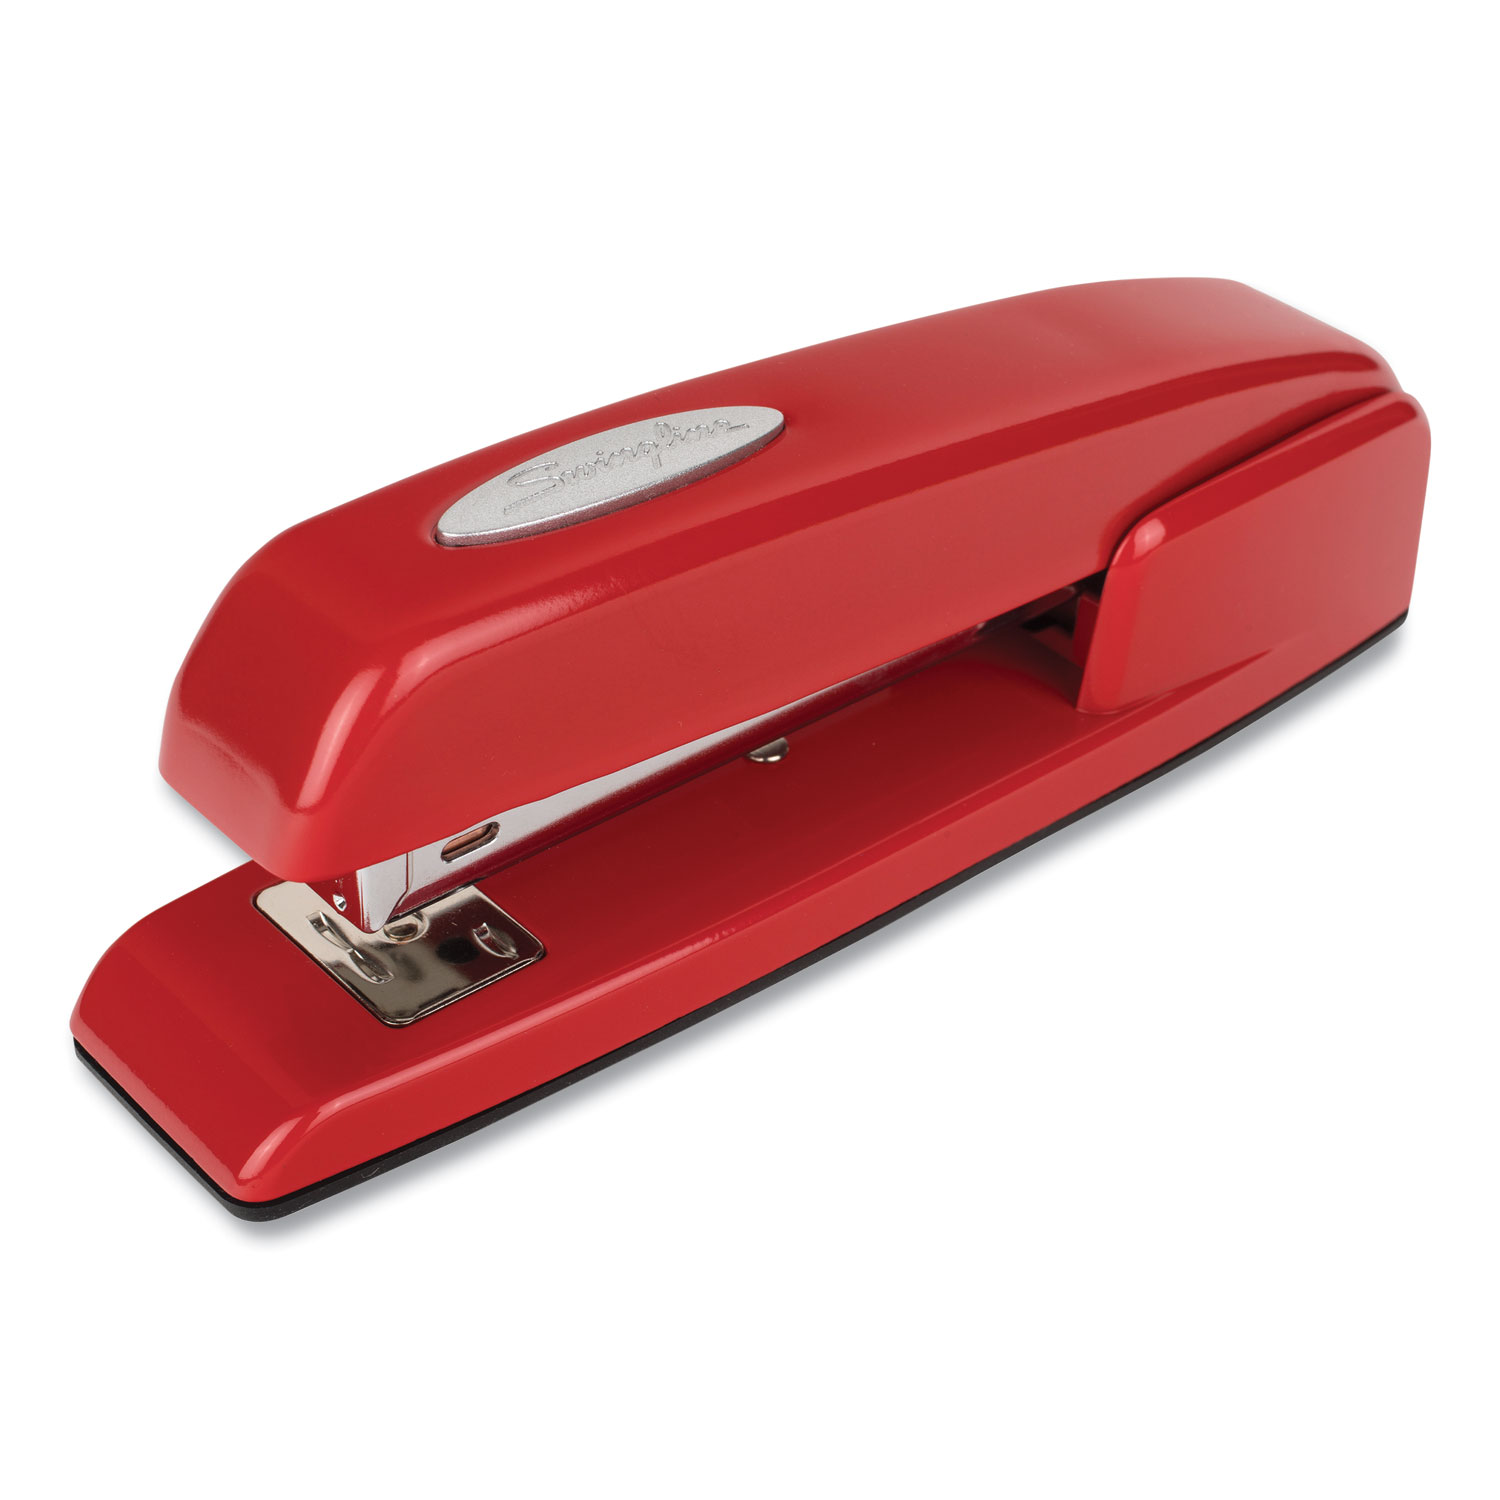 Desk stapler: for up to 30 sheets